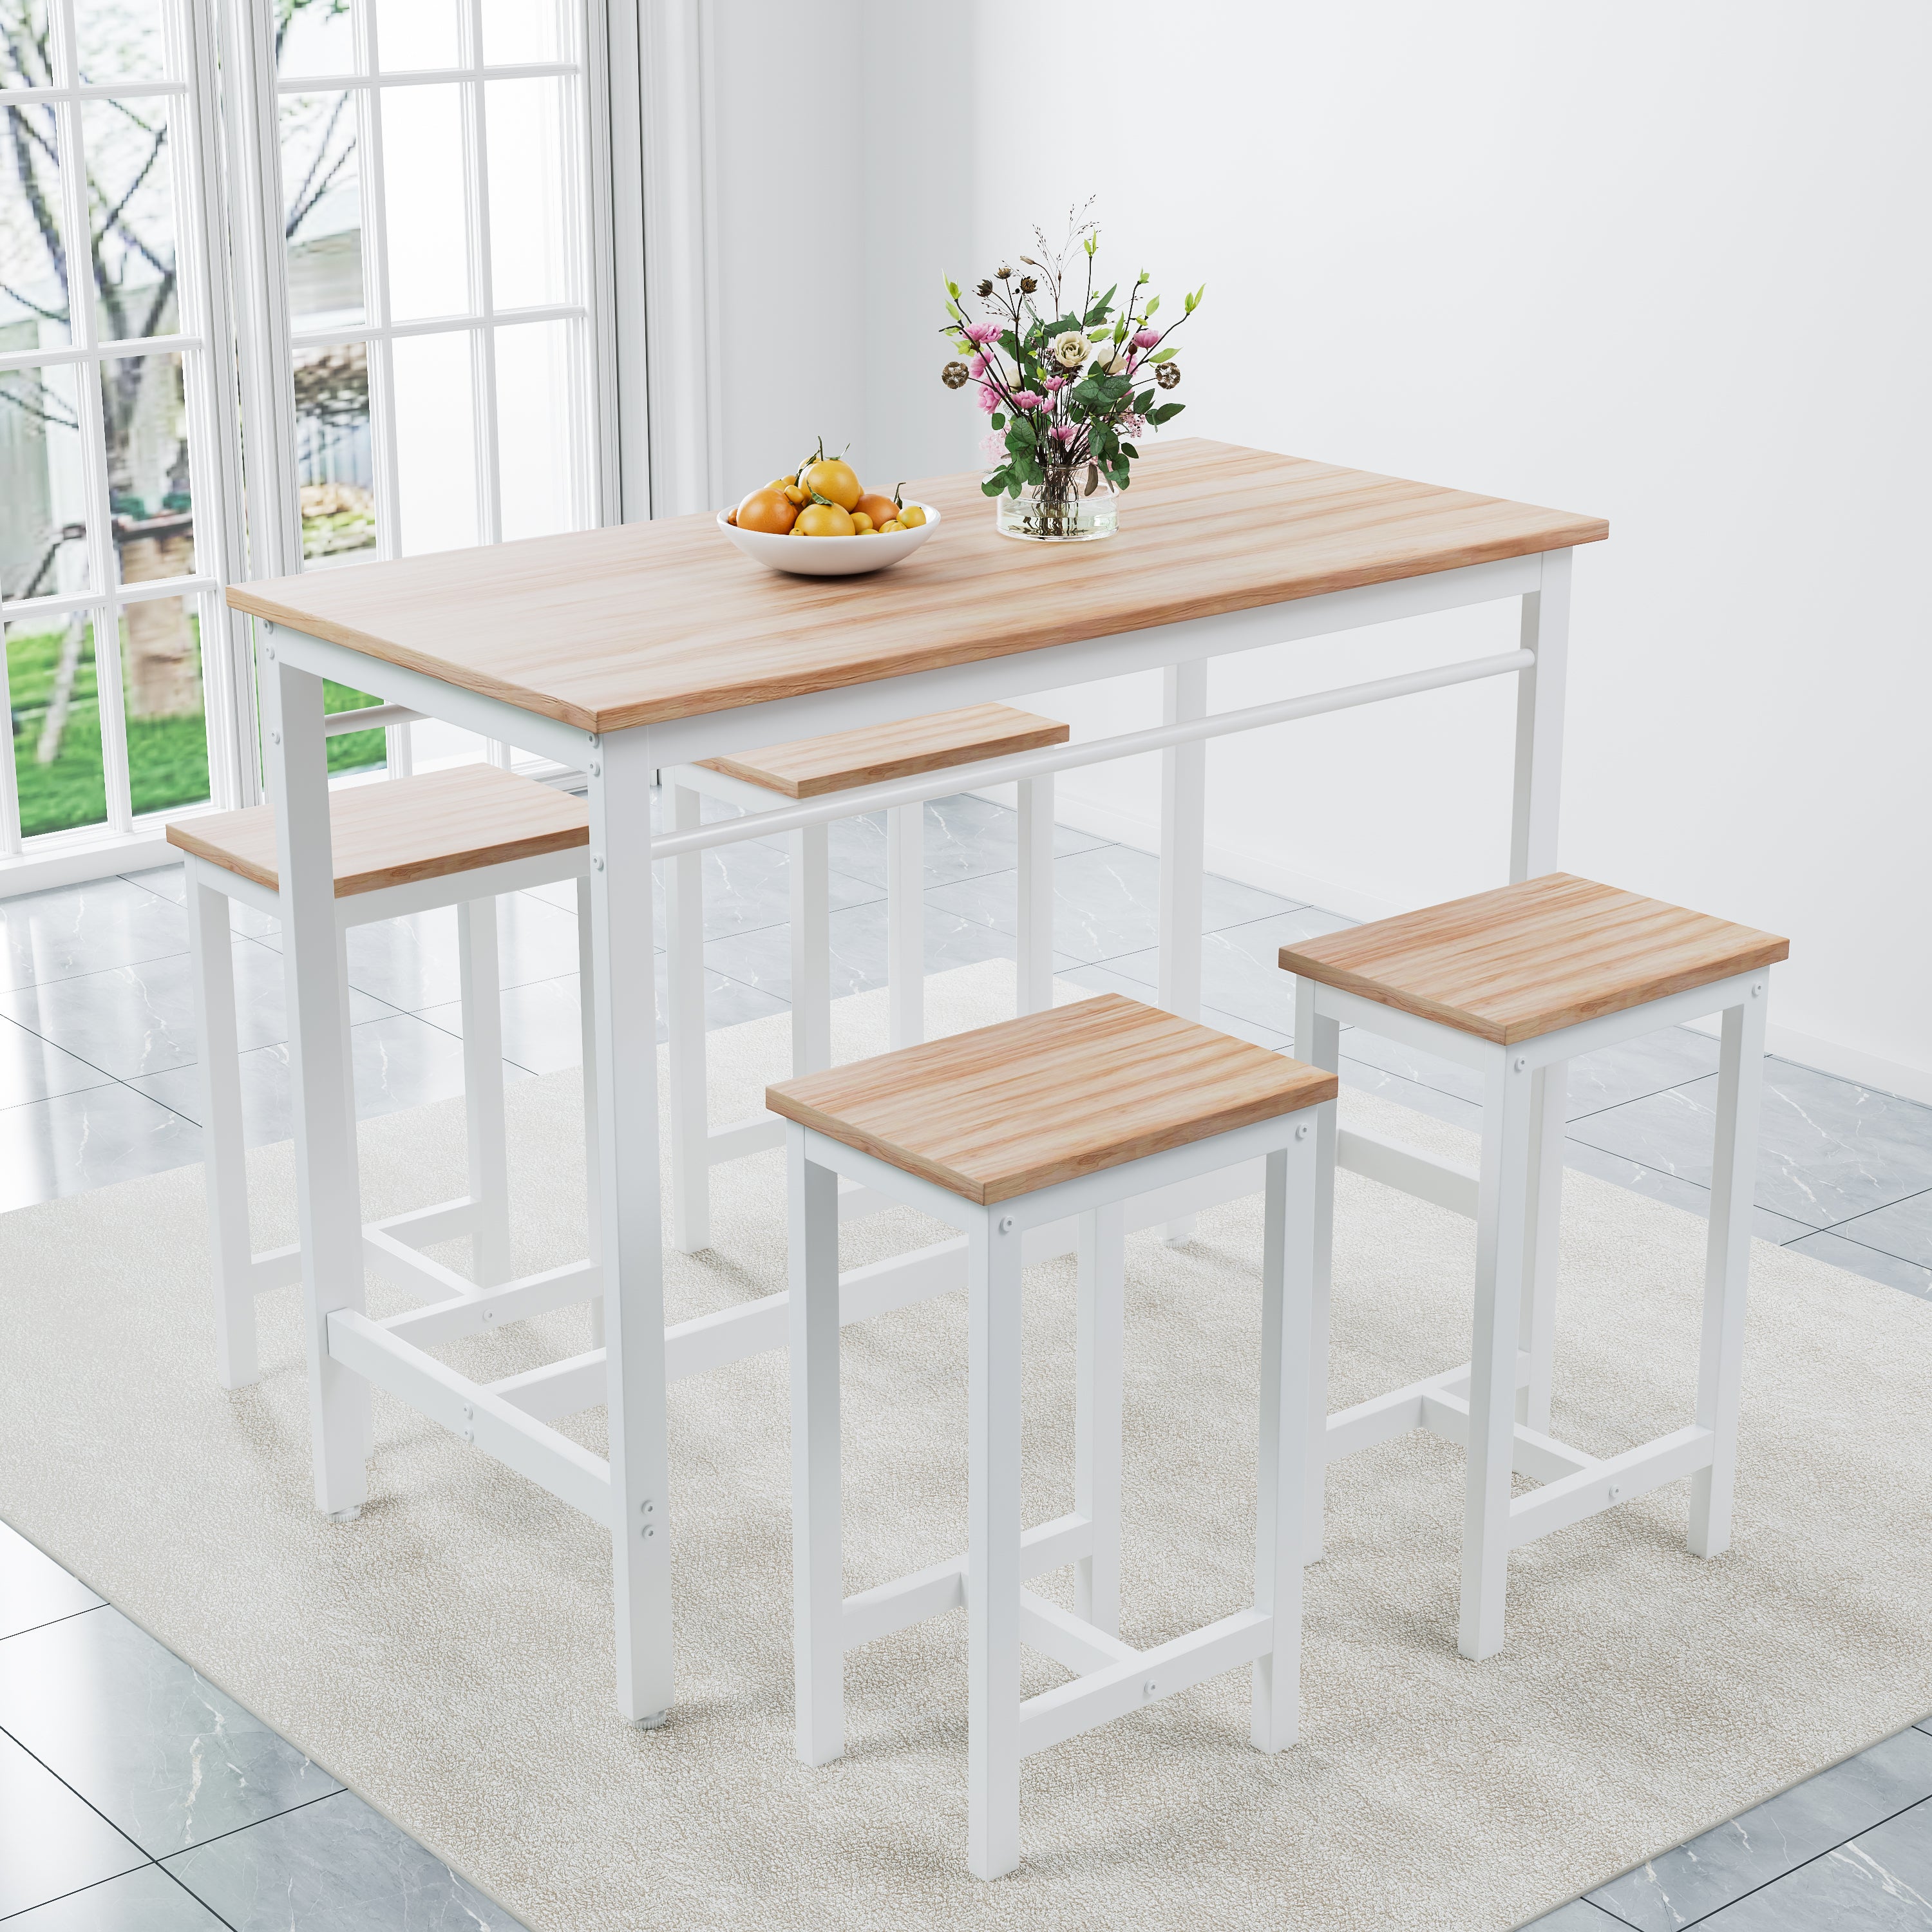 Bellemave® 5-Piece Modern Kitchen Table with Four Bar Stools Set Bellemave®